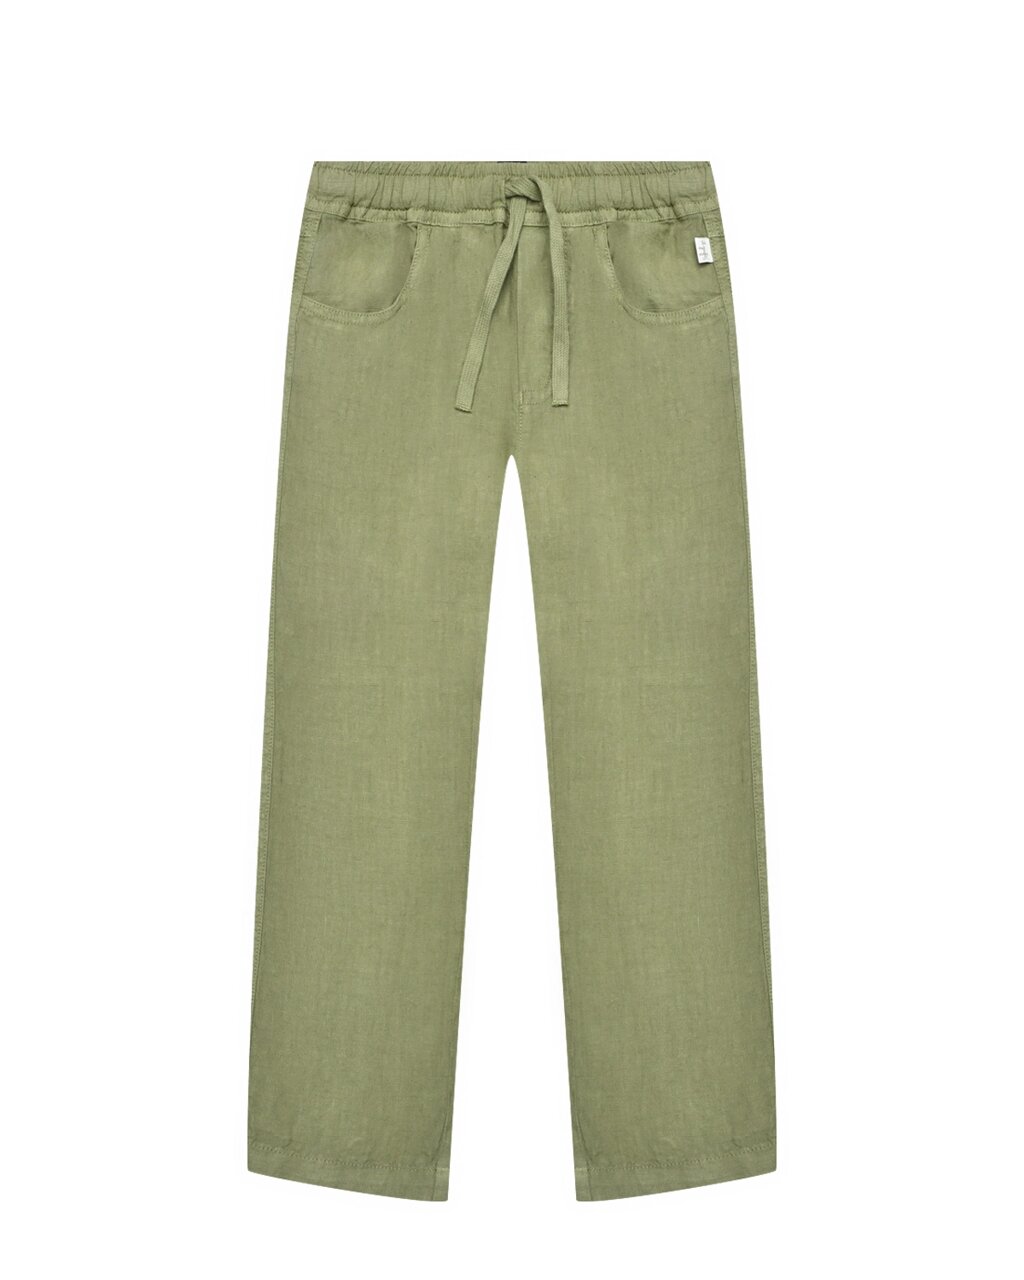 Льняные брюки цвета хаки IL Gufo от компании Admi - фото 1